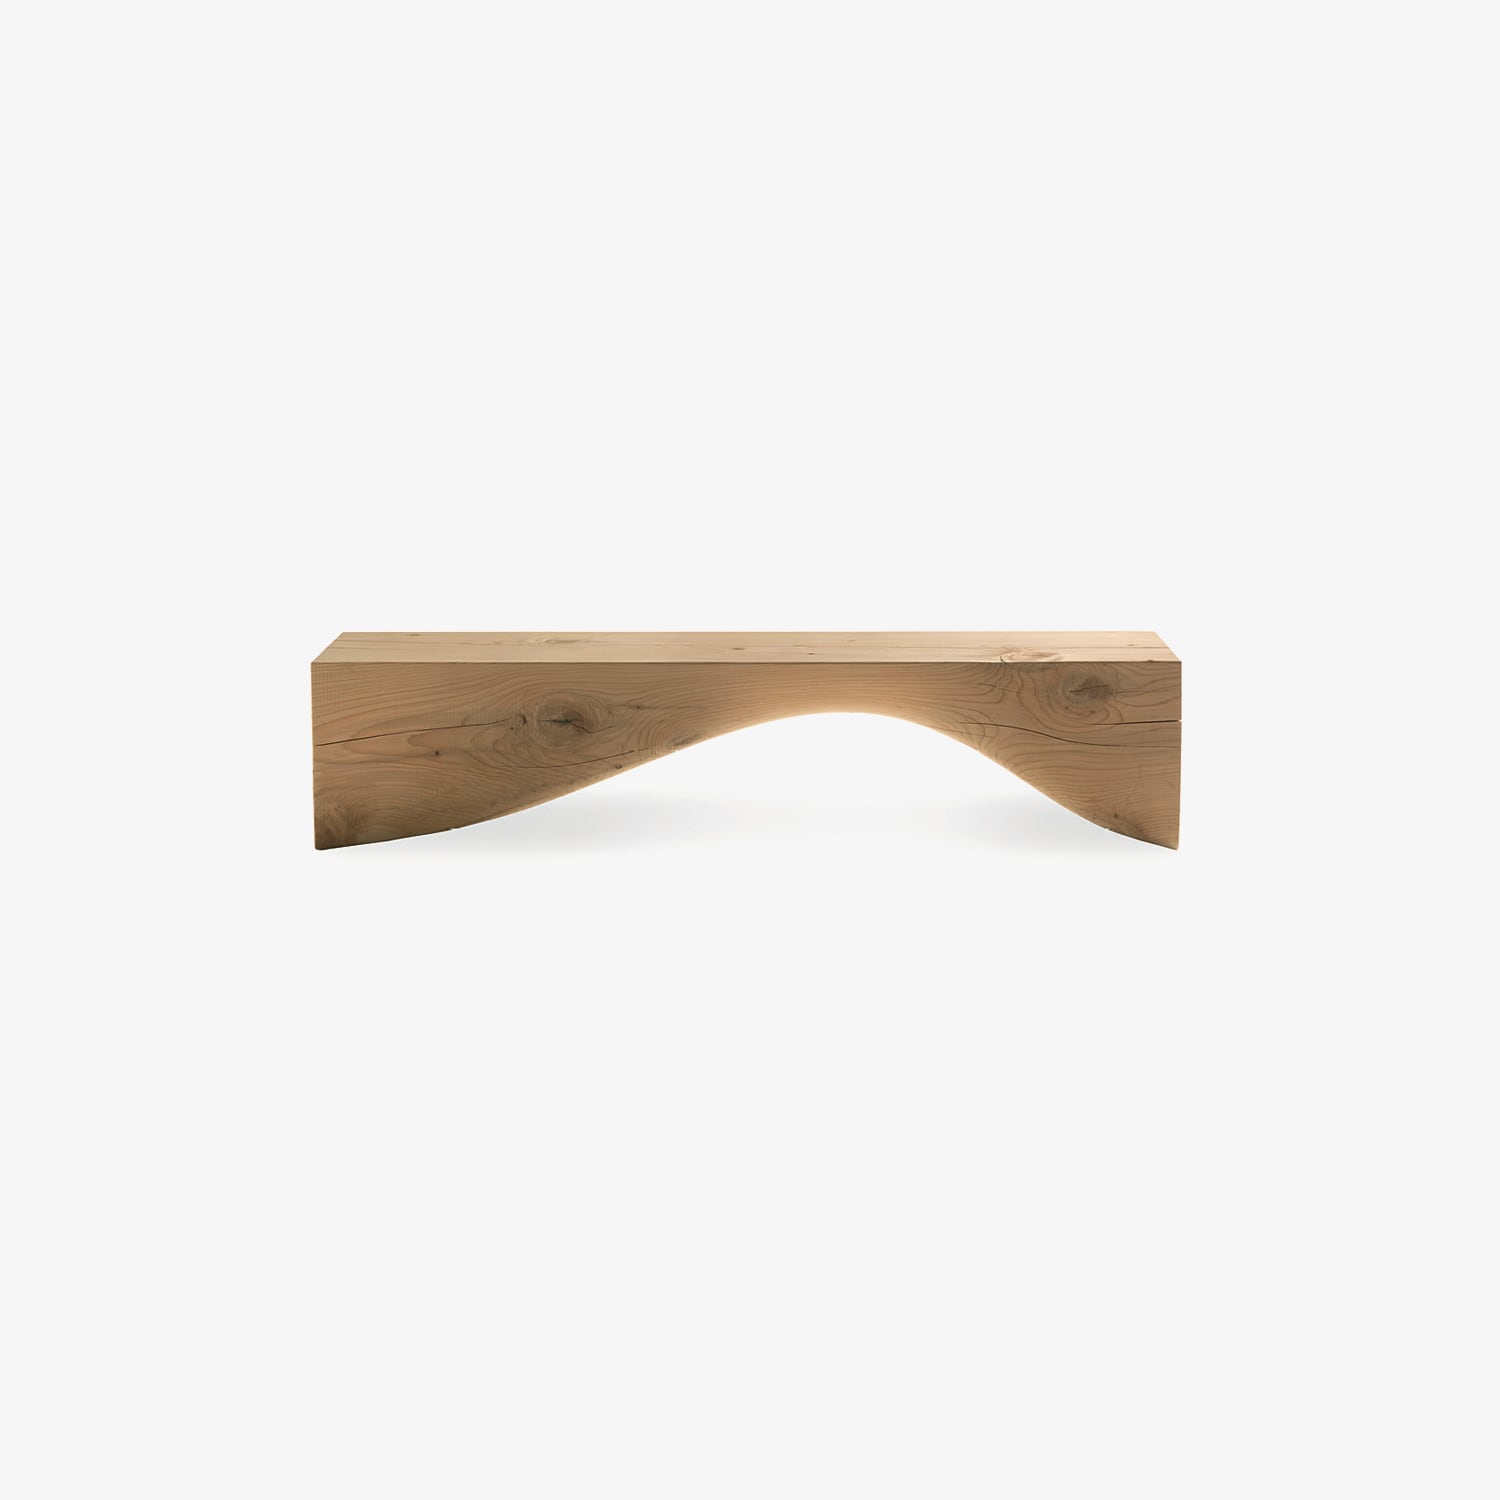 Panca legno massello CURVE BENCH | Panca in legno per esterni | Panca di design | Panca